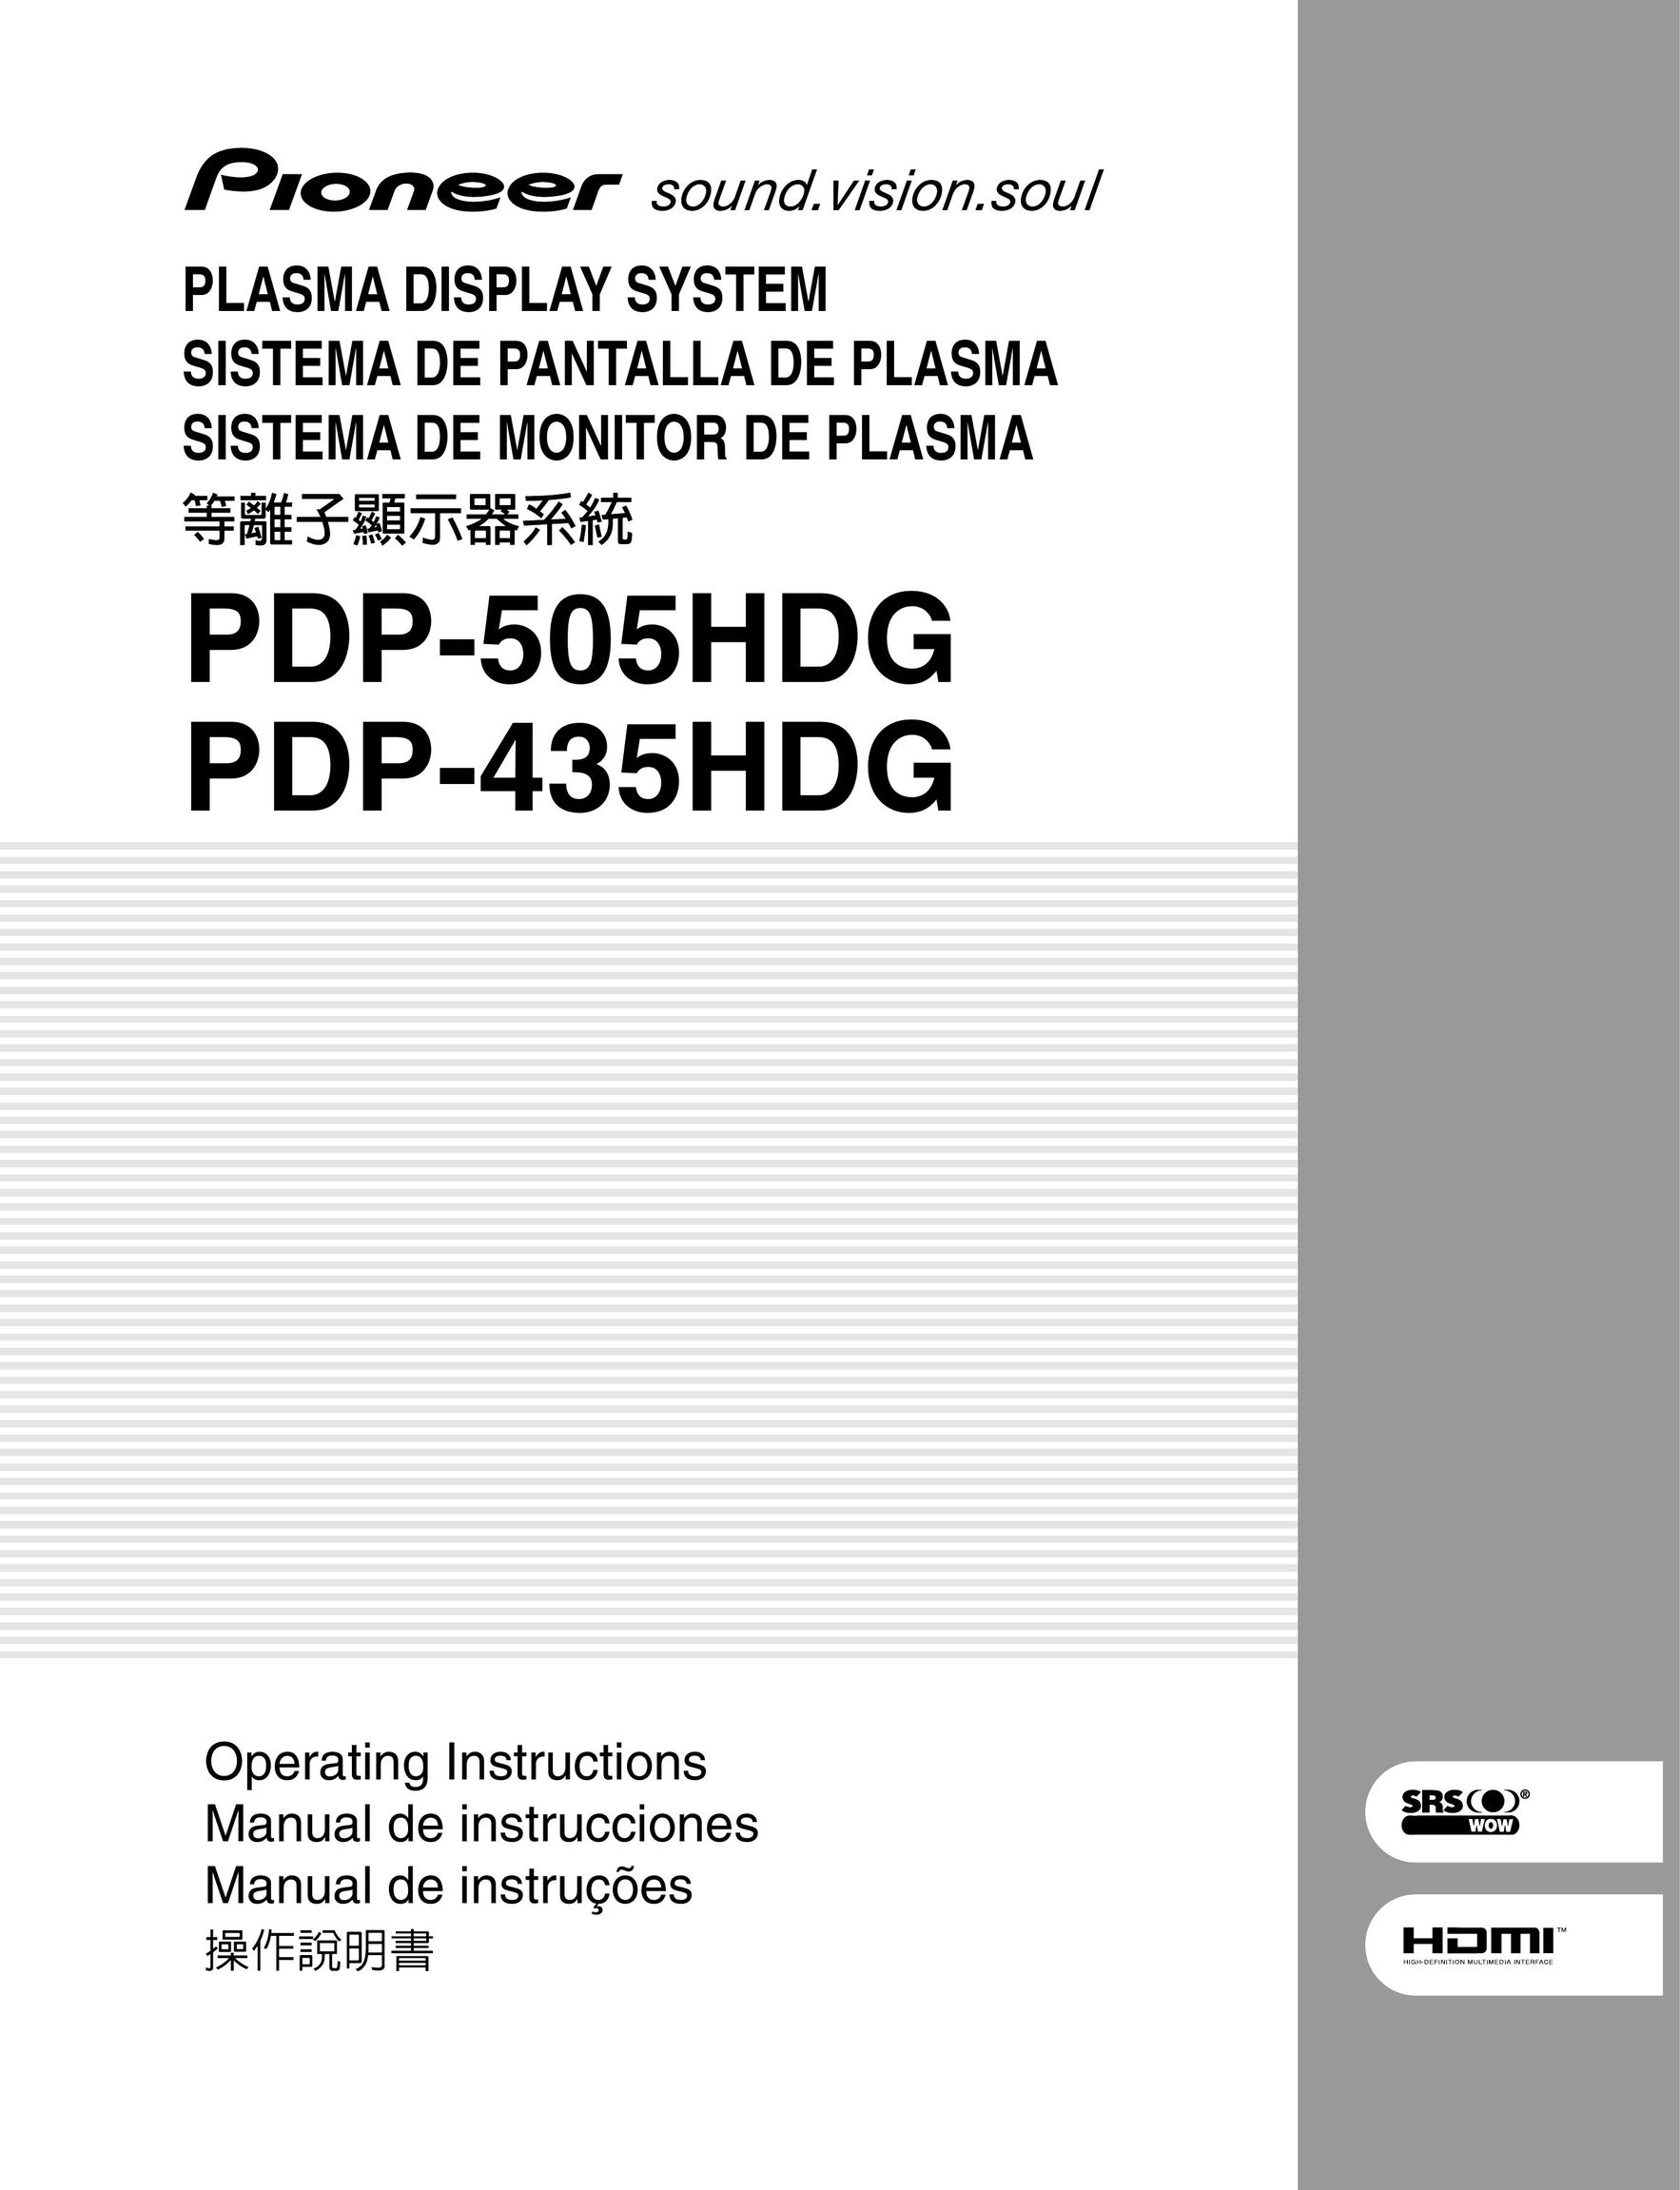 Pioneer PDP-435HDG Flat Panel Television User Manual